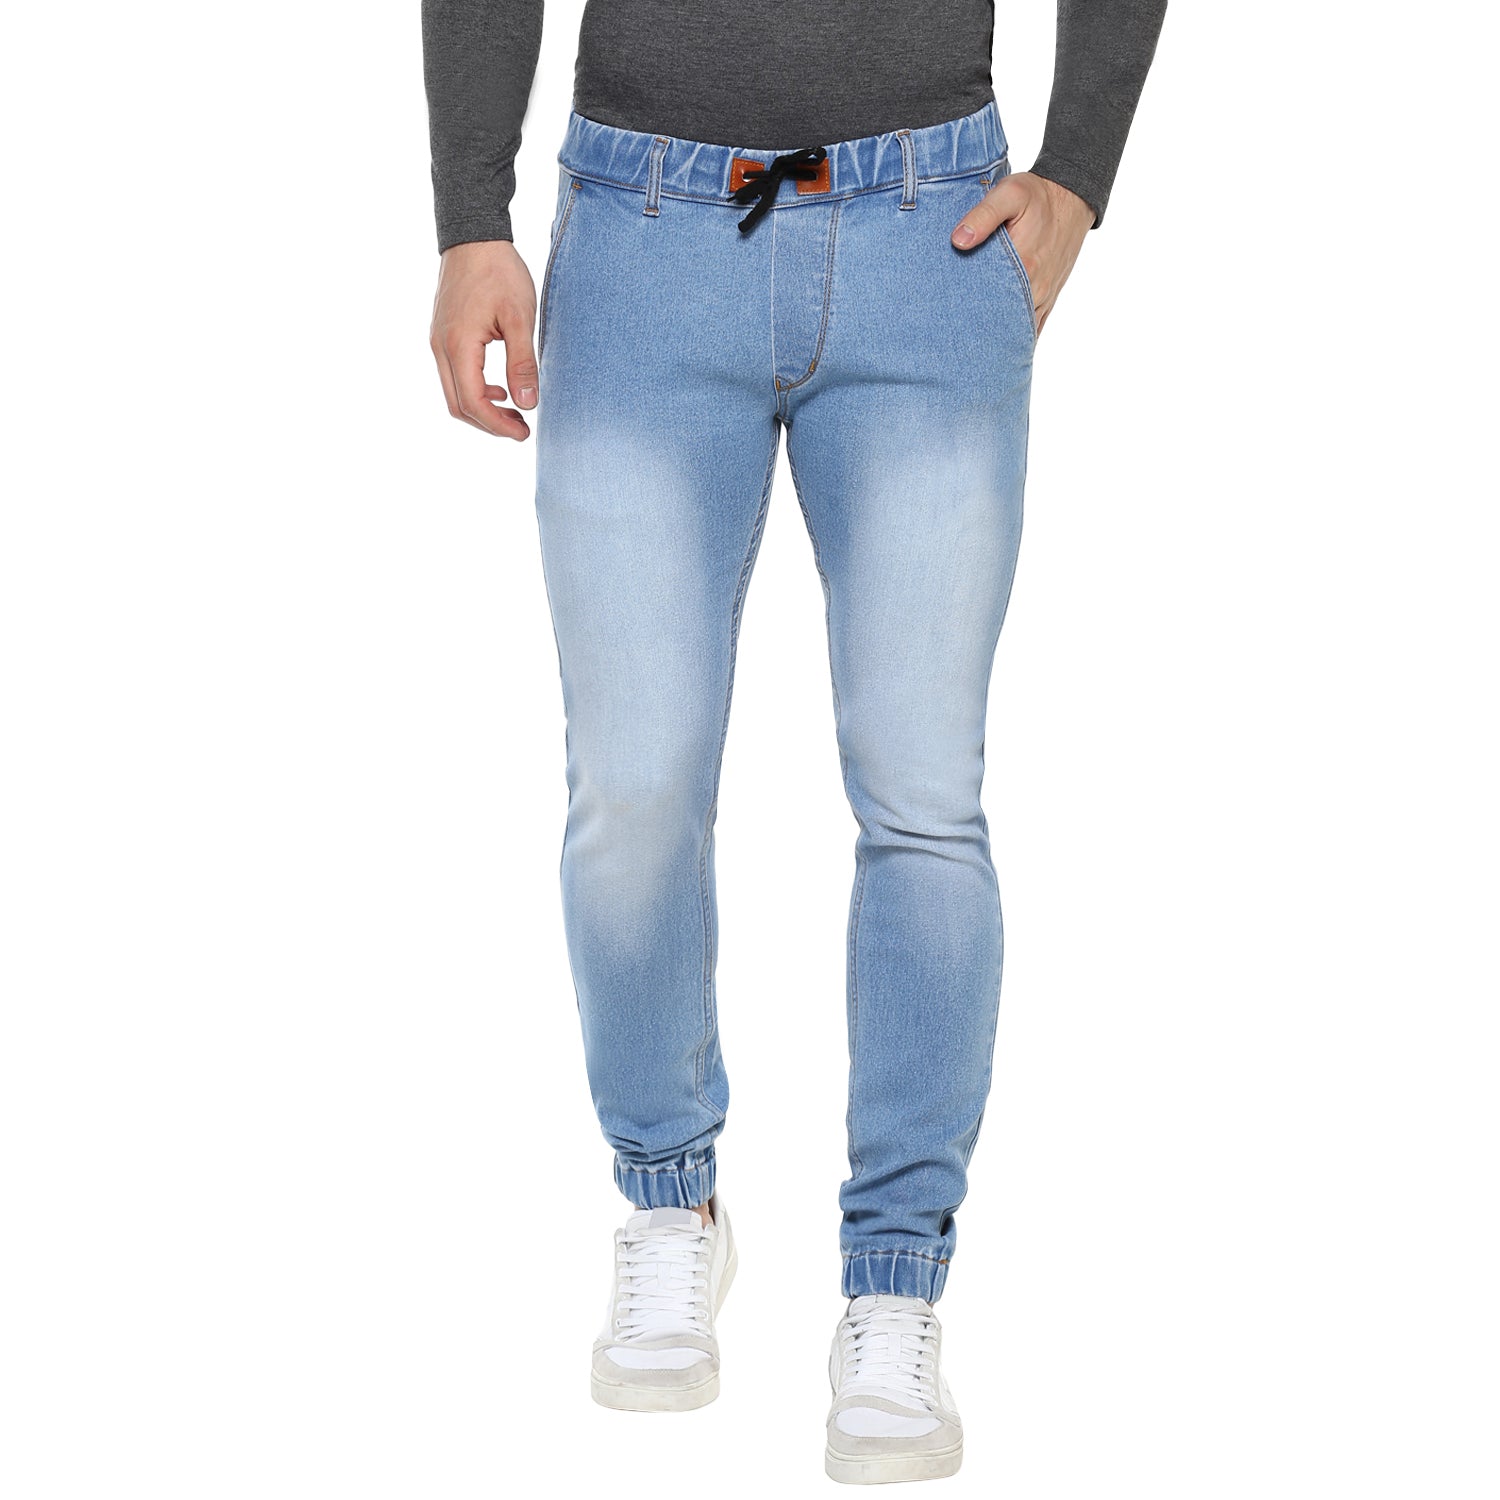 Urbano Fashion Men's Light Blue Slim Fit Stretch Jogger Jeans